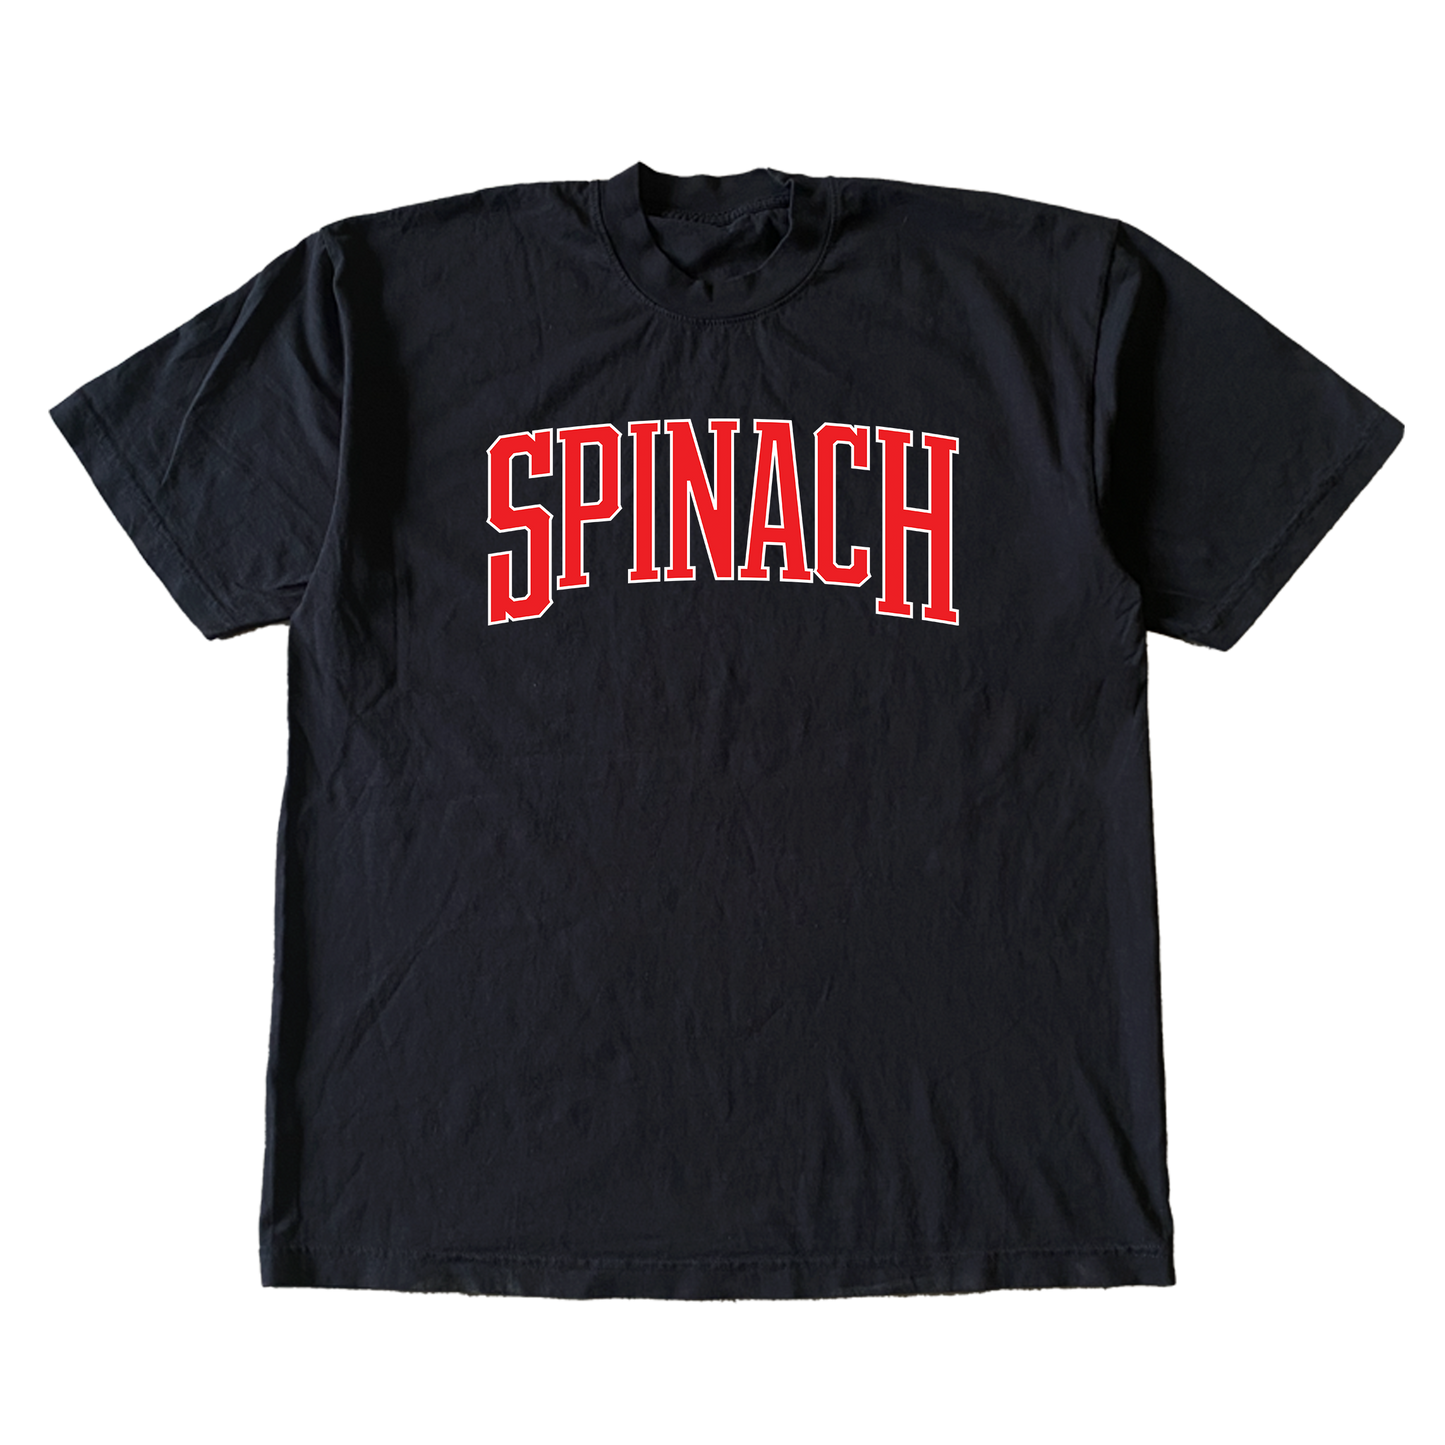 Spinat Collegiate v1 T-Shirt